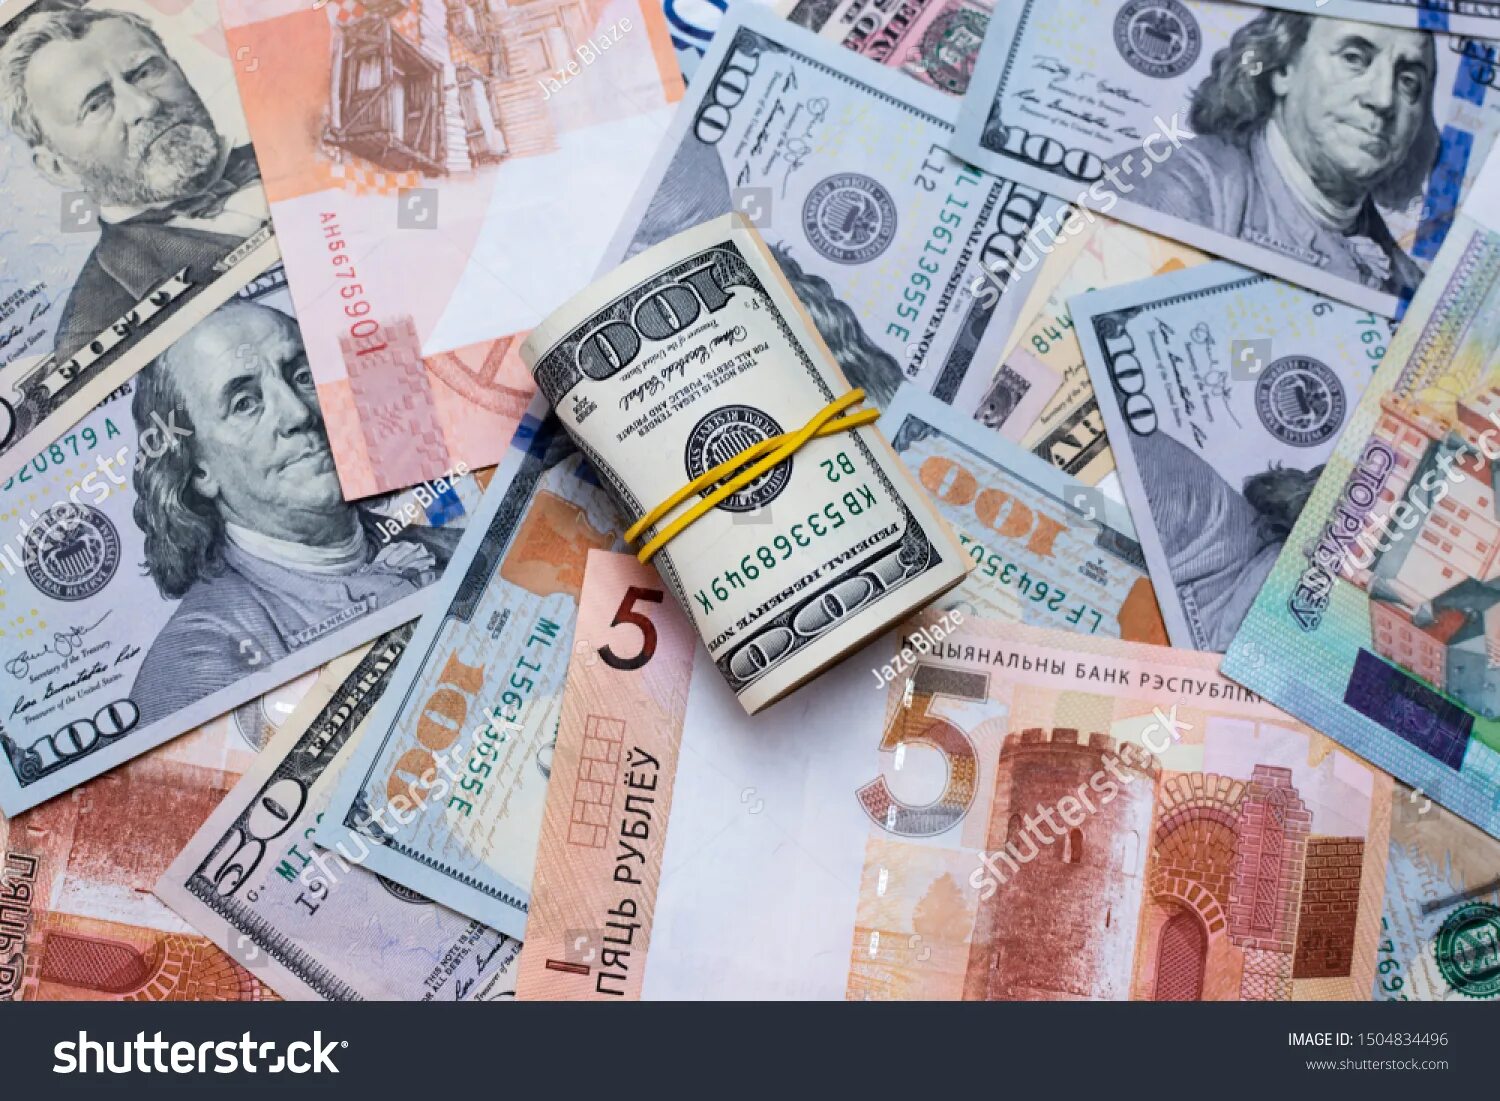 Tl dollar. Иностранная валюта картинки. Доллар евро рубл. Dollars to Euros.